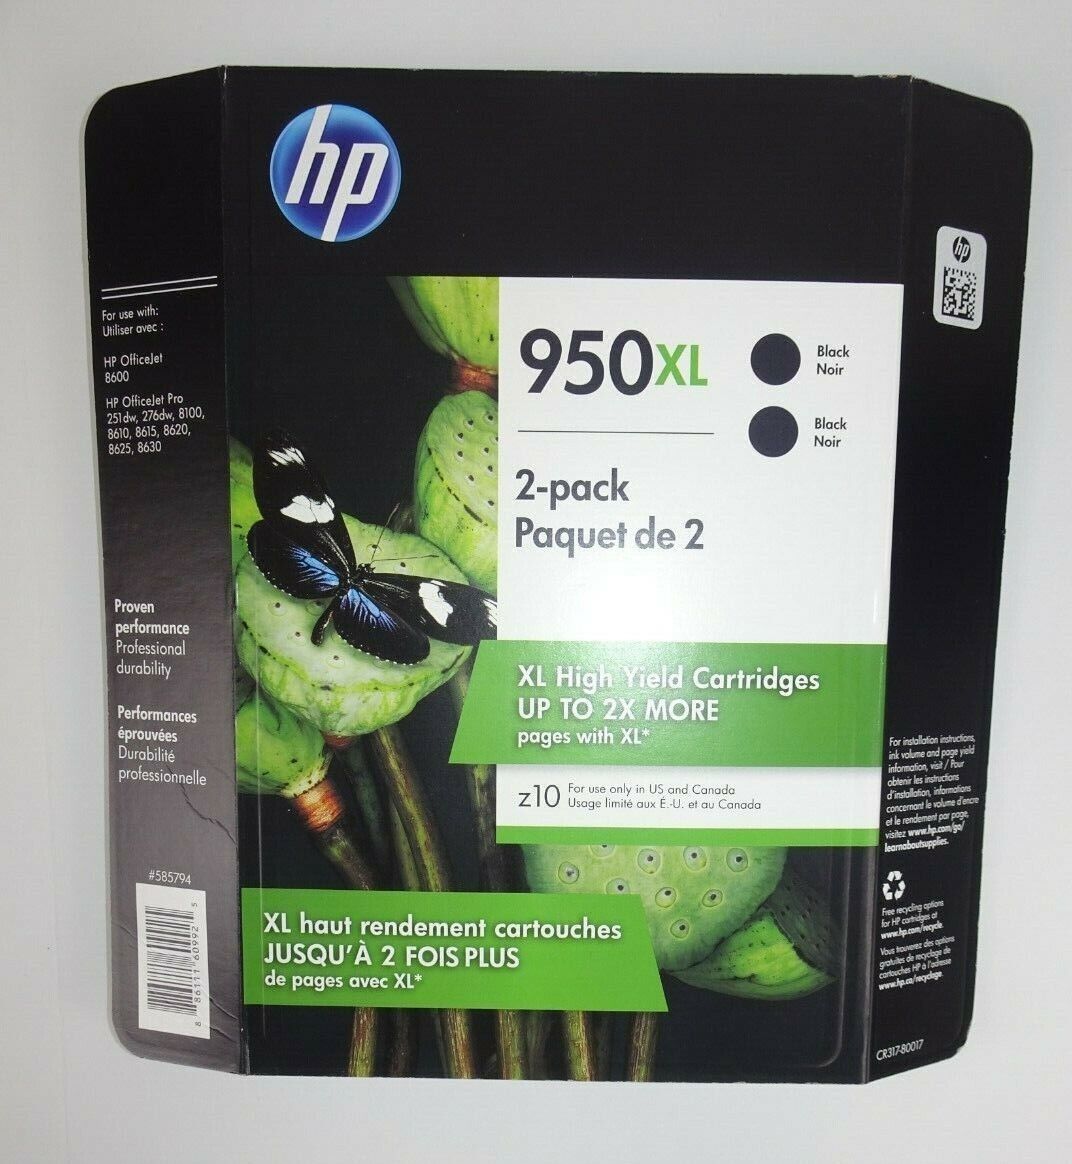 HP 950XL Black Ink Cartridges Pack of 2 Late 2020 Date *Exact Item* NIP